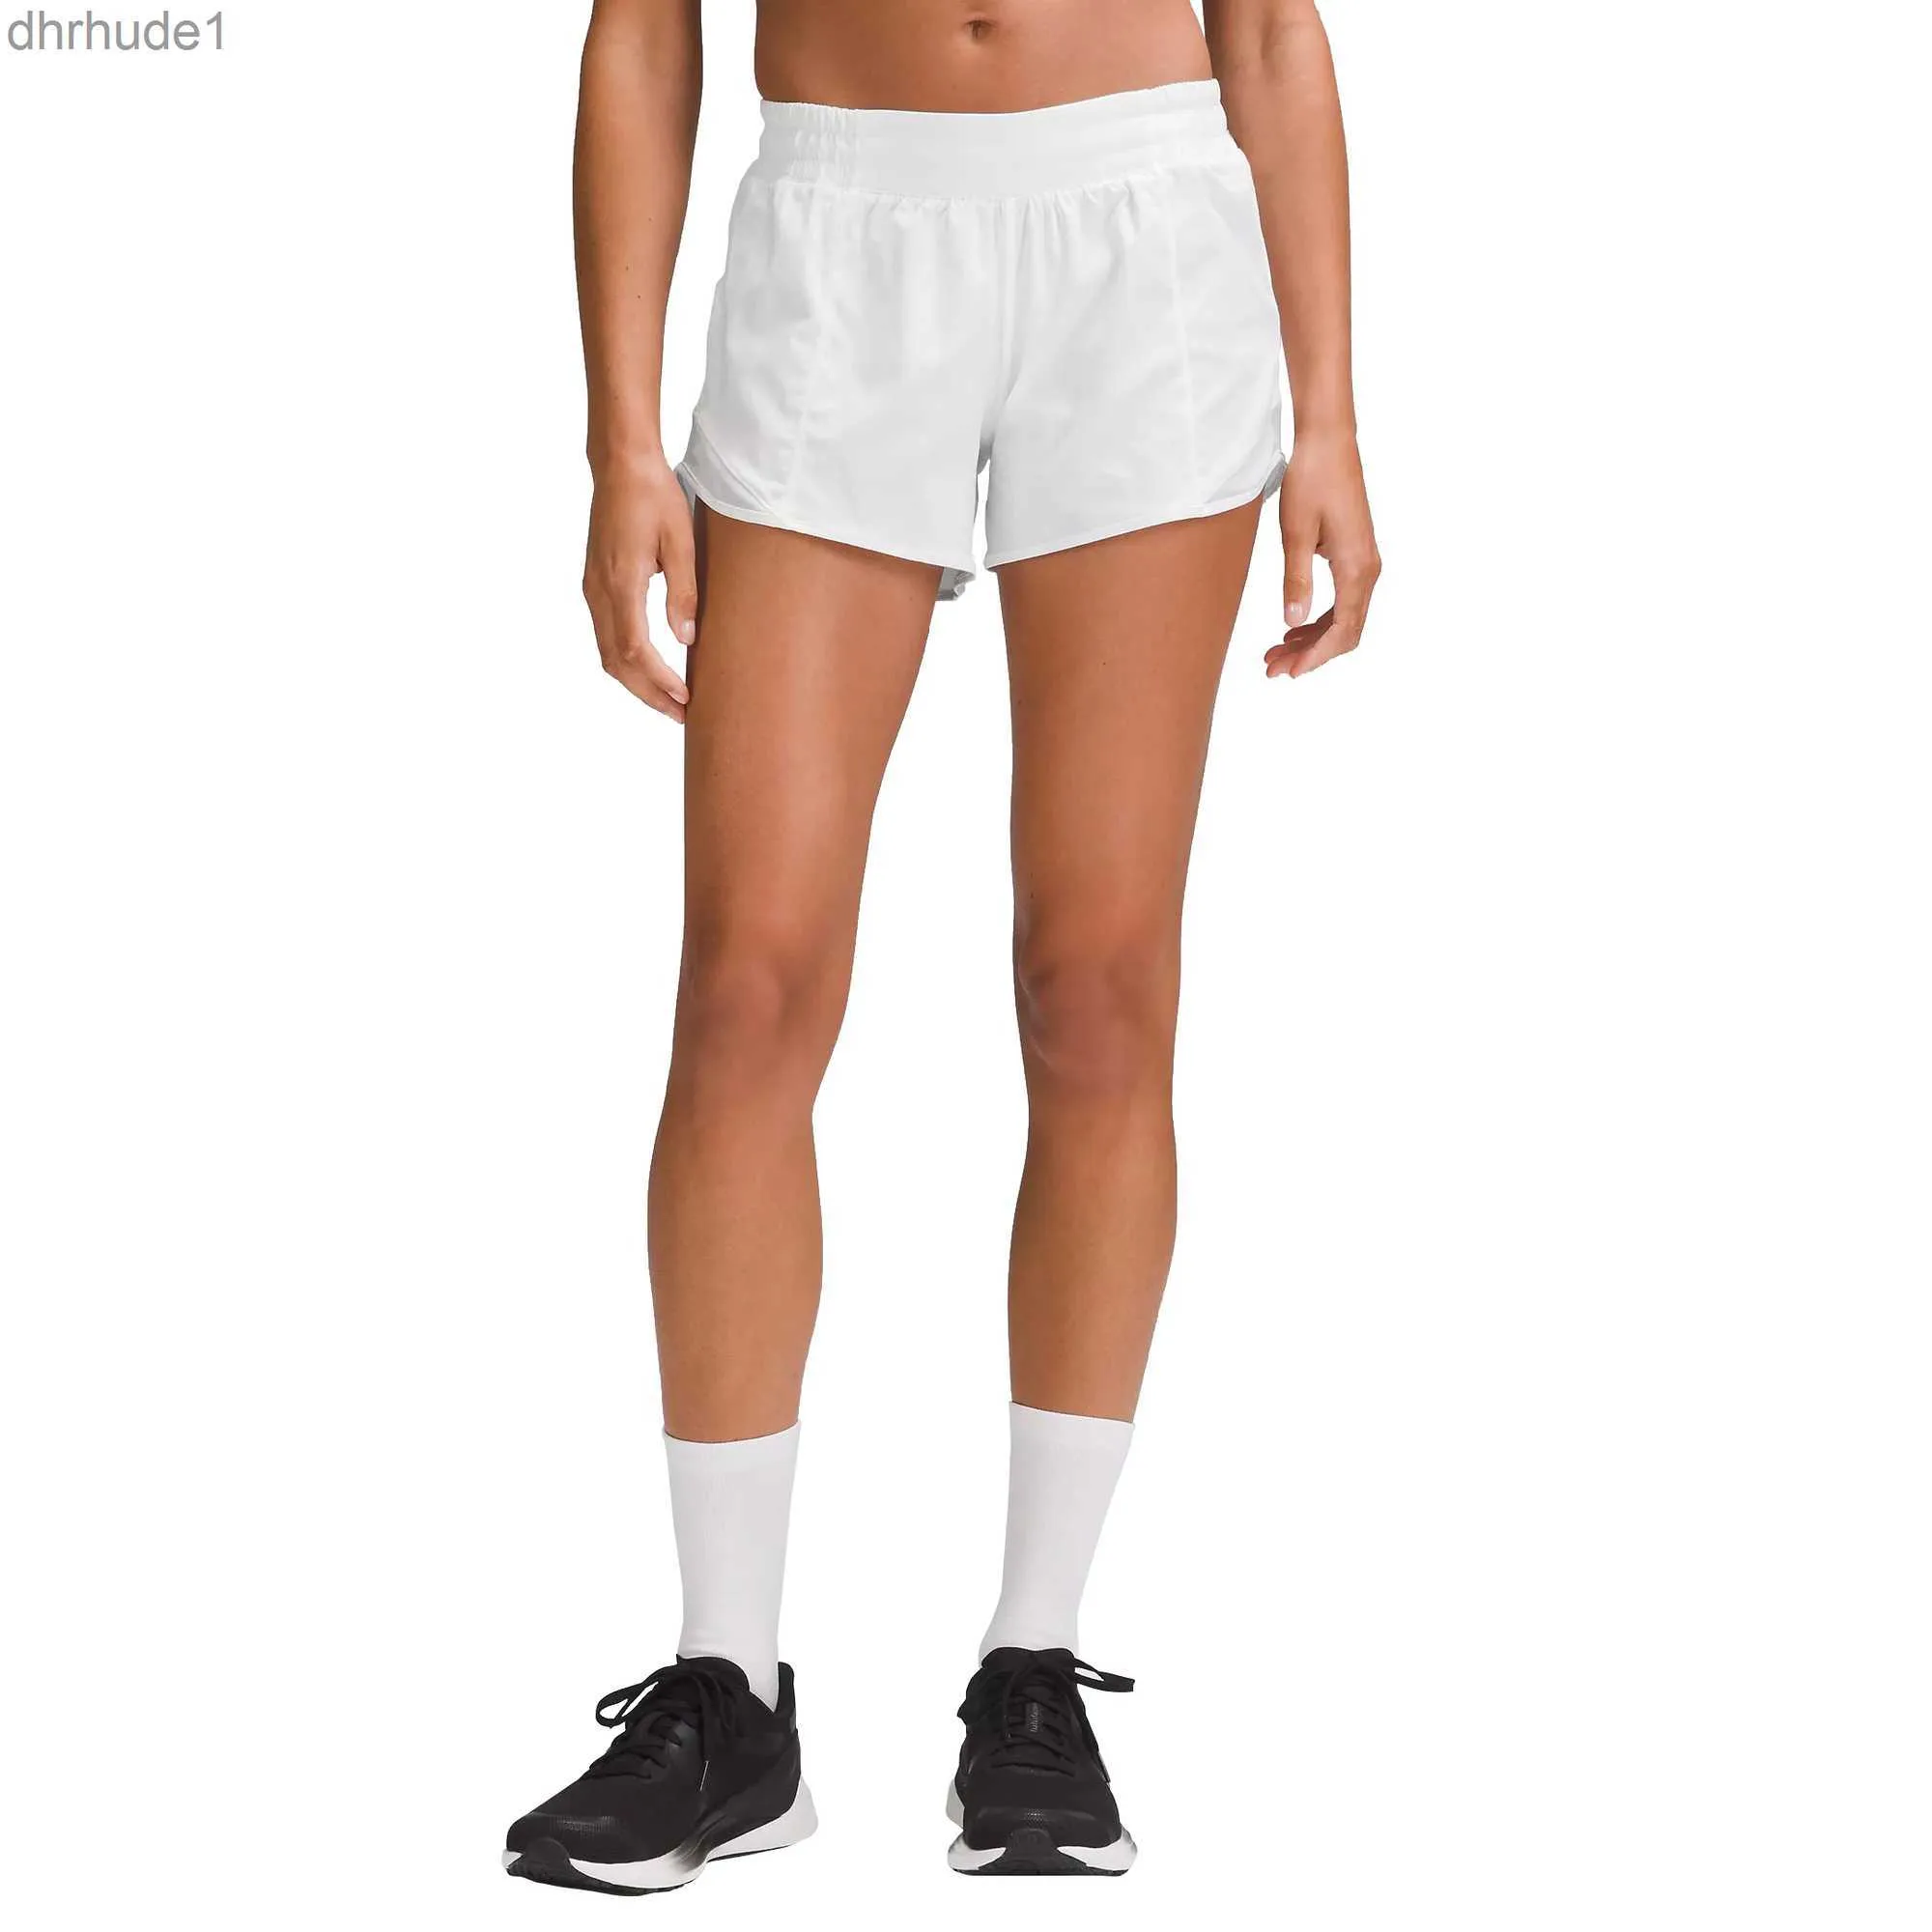 Yoga Womens Hotty Shorts High Taist Gym Fitness Training Trainers Sport Pantalon Short Fashion Derre rapide Pantalon solide x4LY